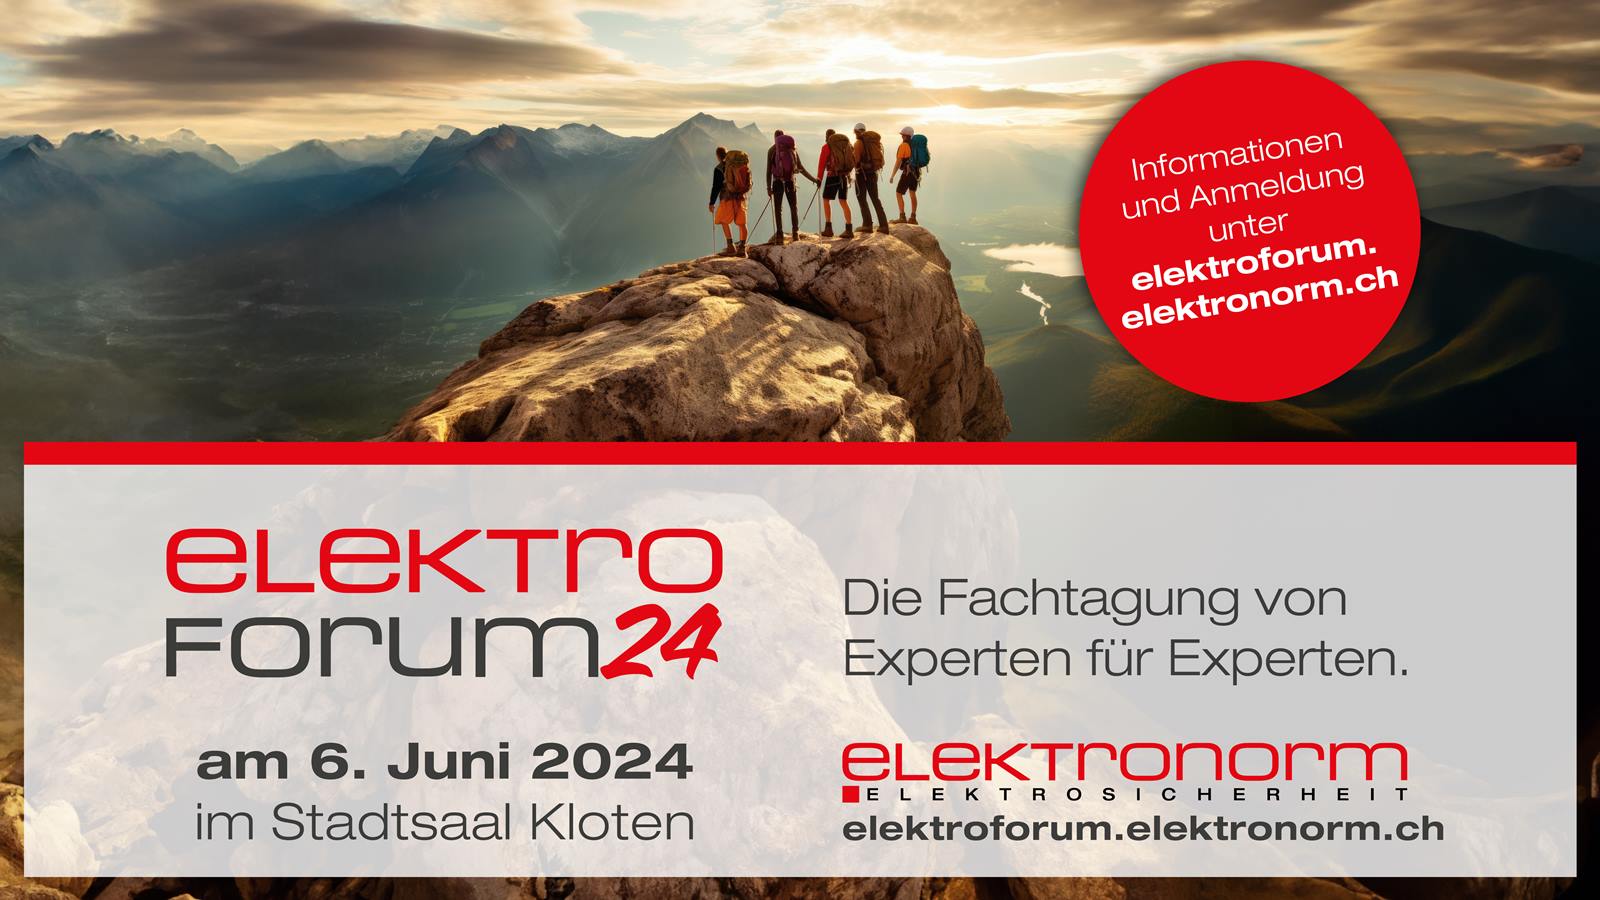 Elektroforum der Elektronorm AG in Kloten